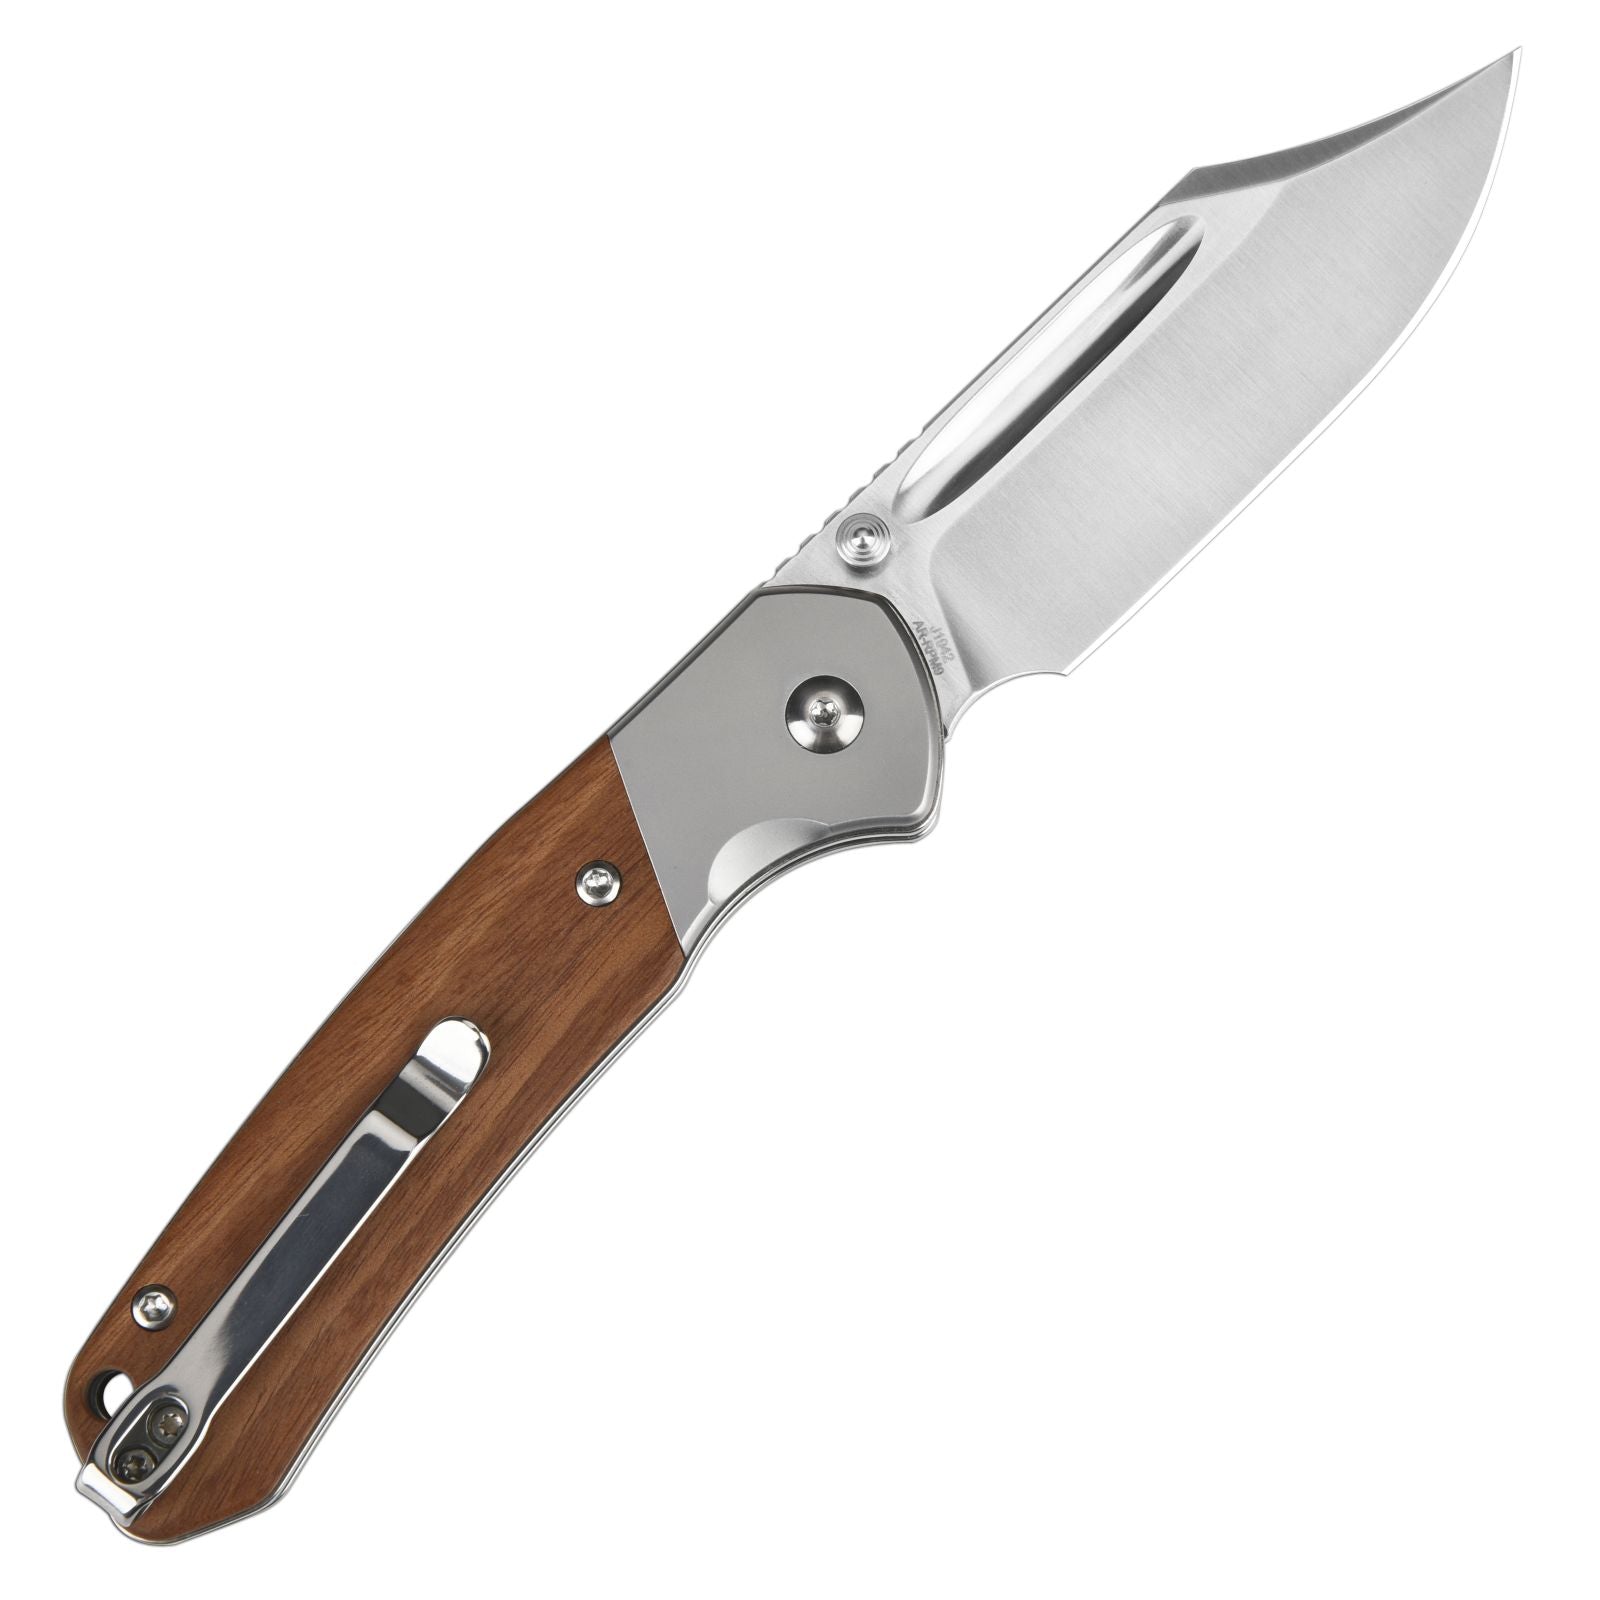 CJRB Bowie Pyrite J1942 AR-RPM9 Steel Blade Wood Handle Folding Knives